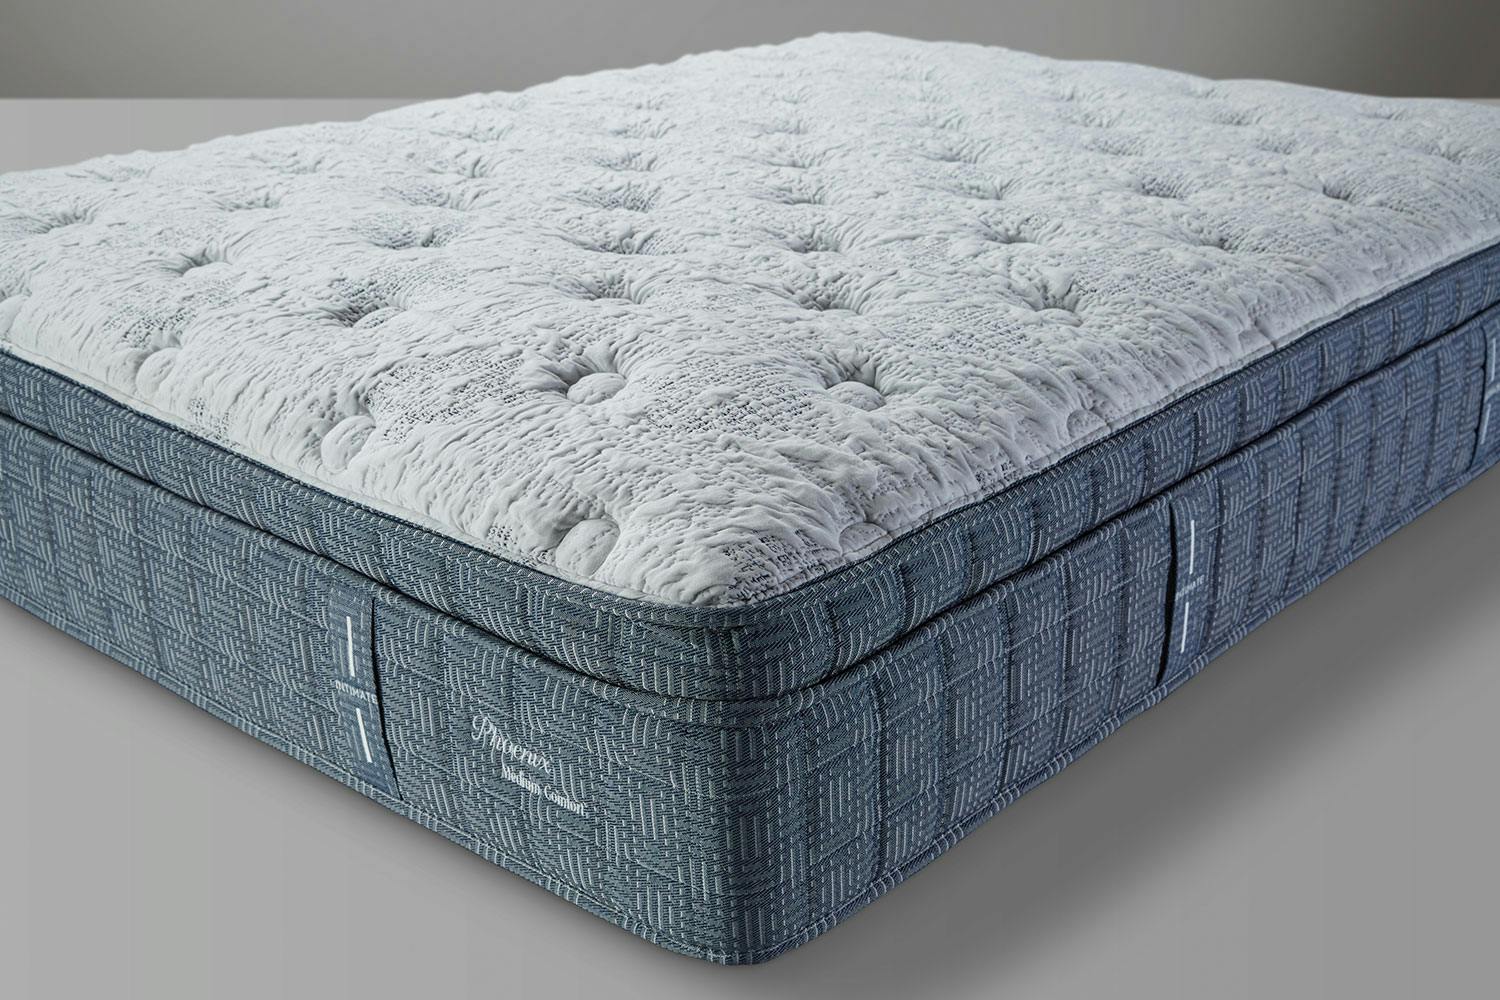 new king mattress set